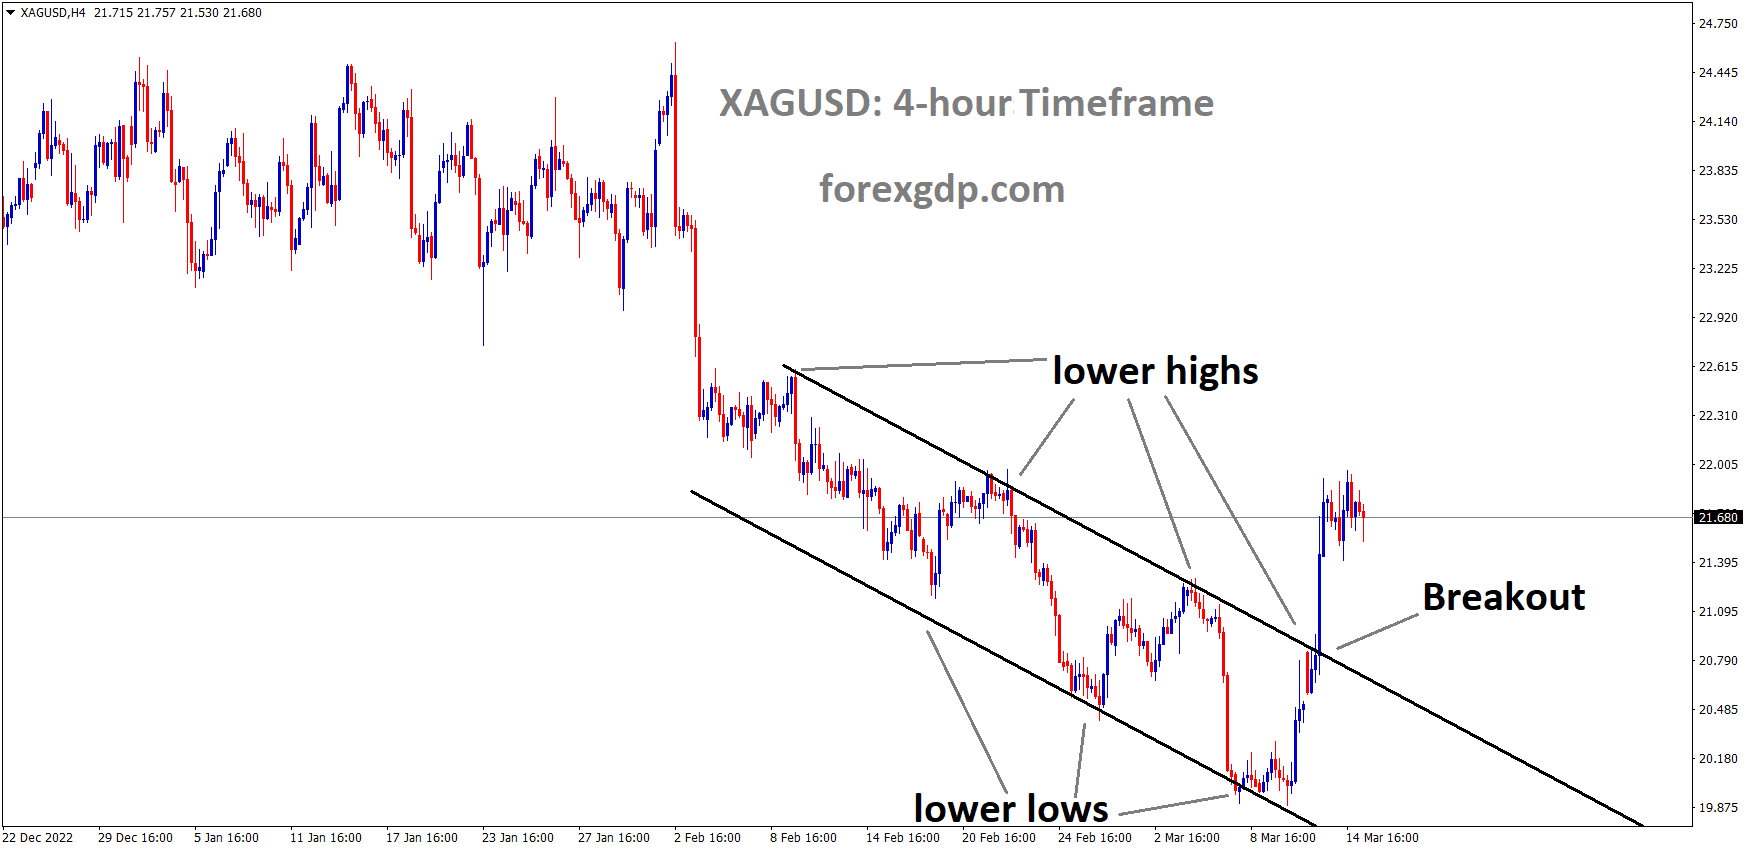 XAGUSD Silver price has broken the Descending channel in upside.